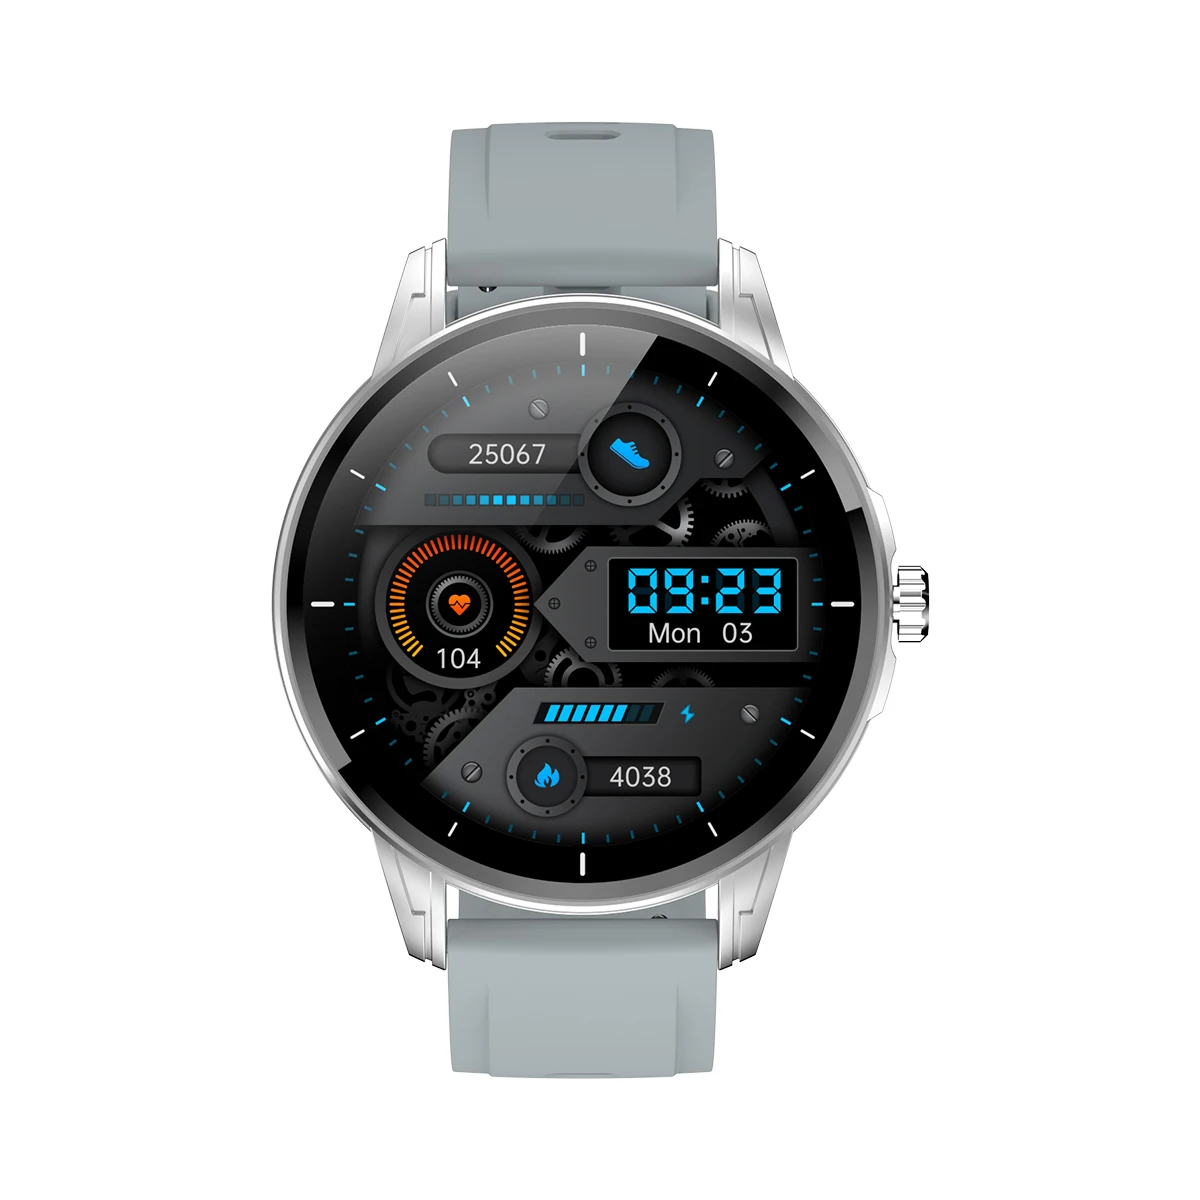 

360 by 360 Resolution Round Screen Heart Rate SP02 Blood Pressure Multi Sport H36 Smart Bracelet 1.32 inch H36 Smart Watch